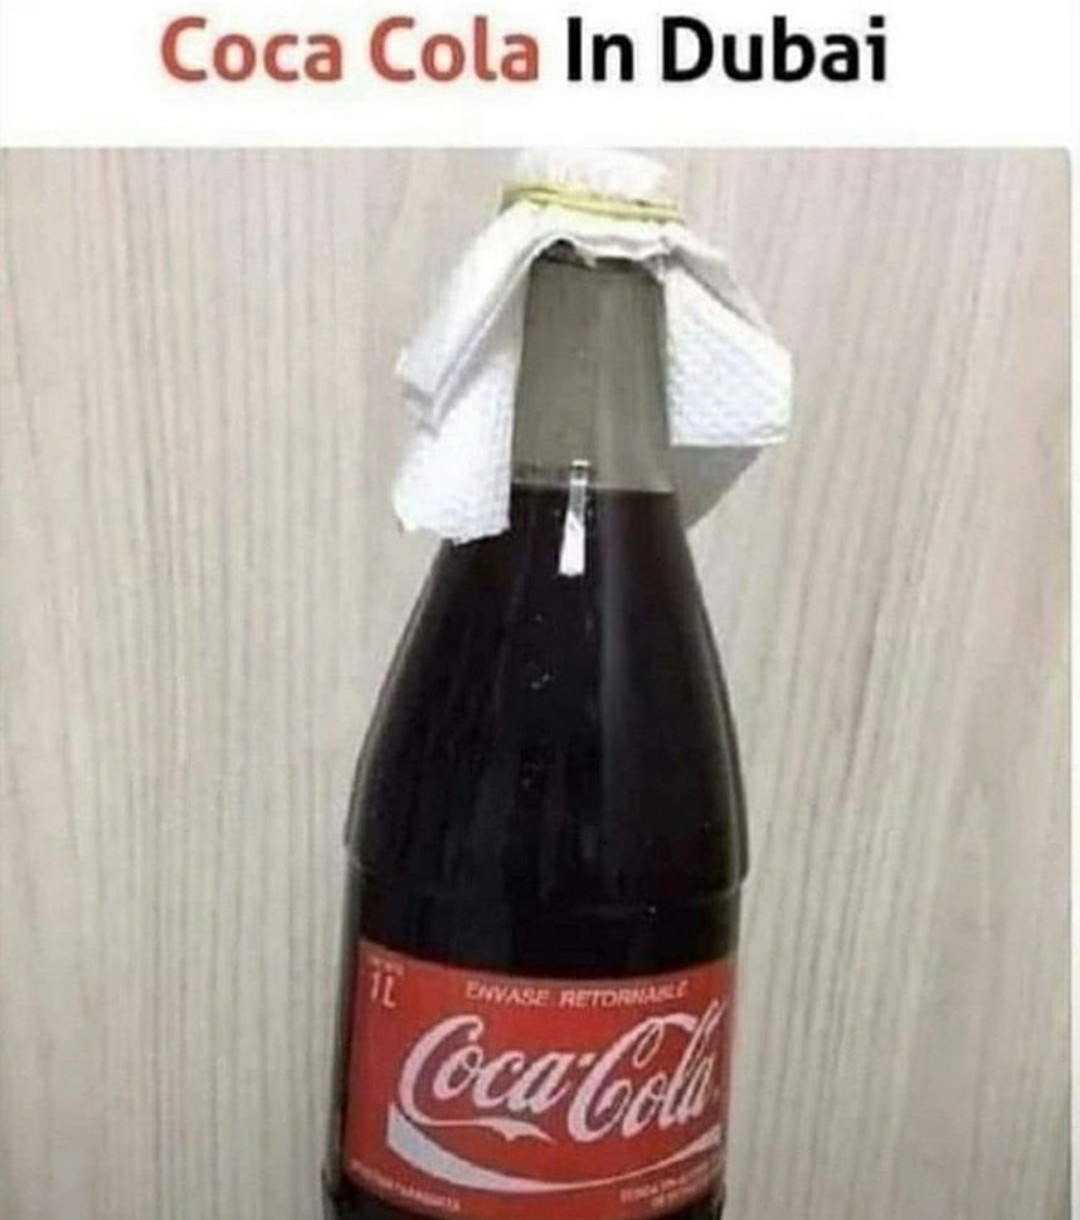 Coca cola for the rich - meme